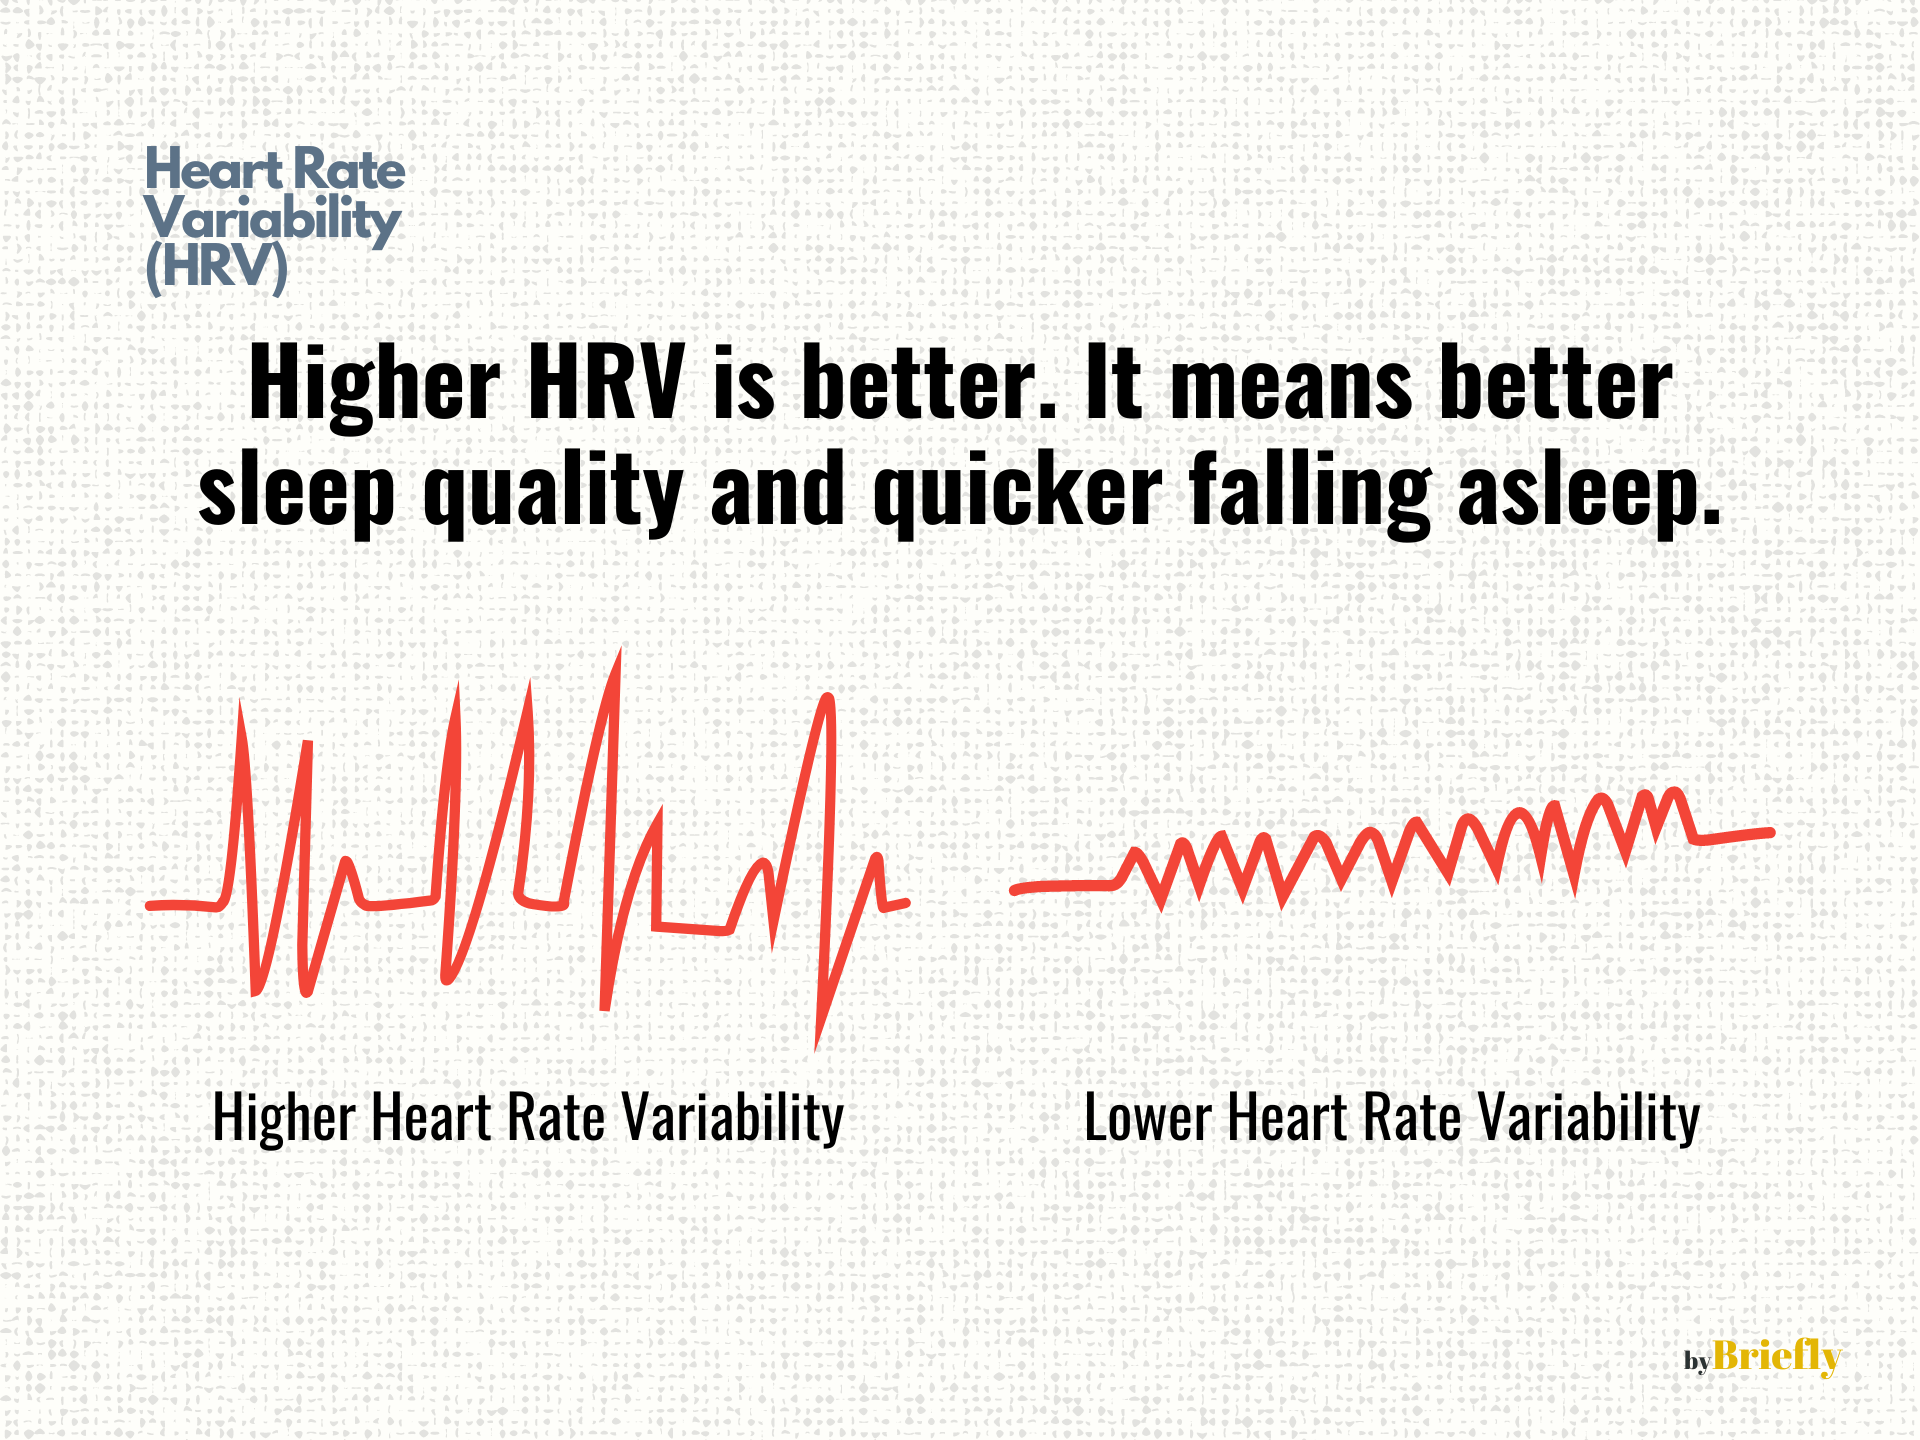 higher HRV in smart ring members